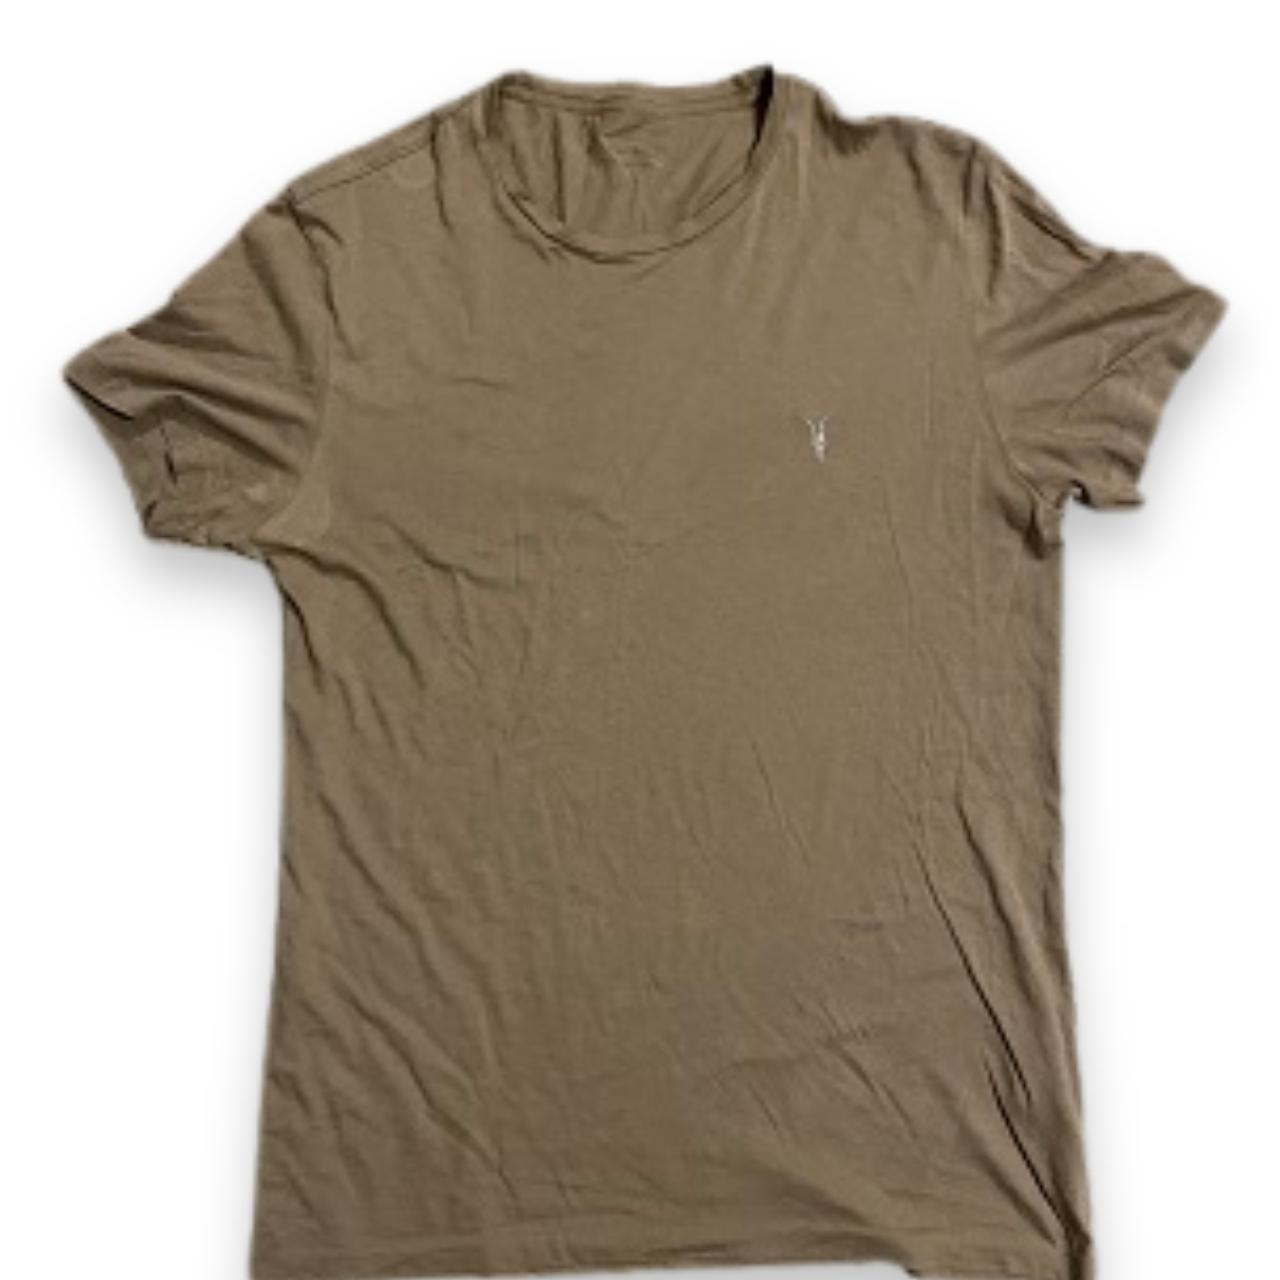 Vintage All Saint Coffee brown Plain Crew neck T-Shirt